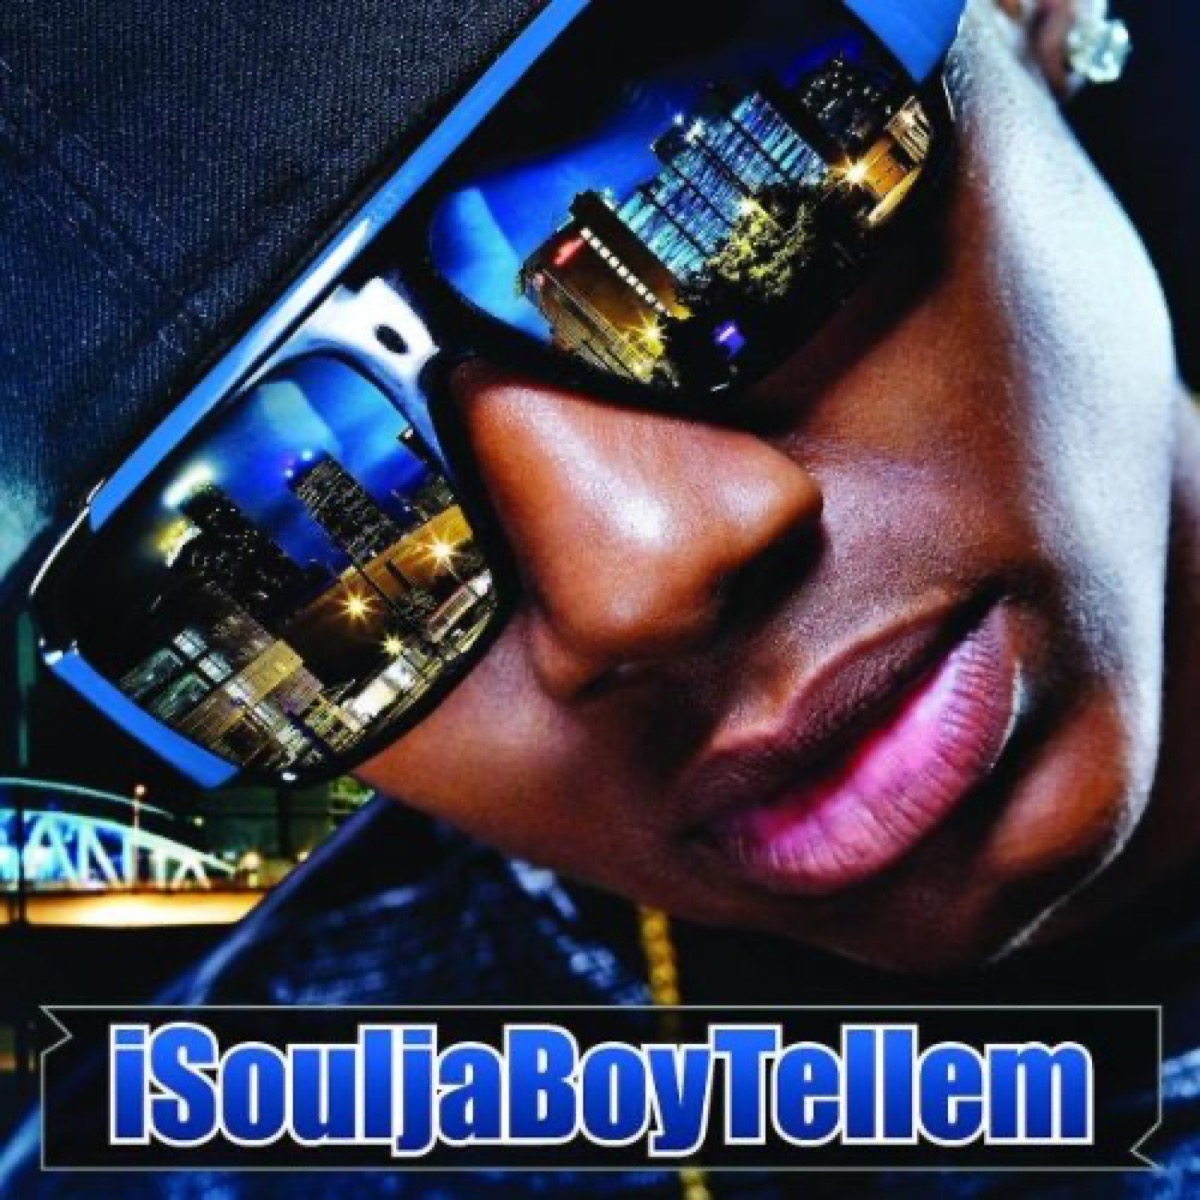 The album cover of "iSouljaBoyTellem" by Soulja Boy